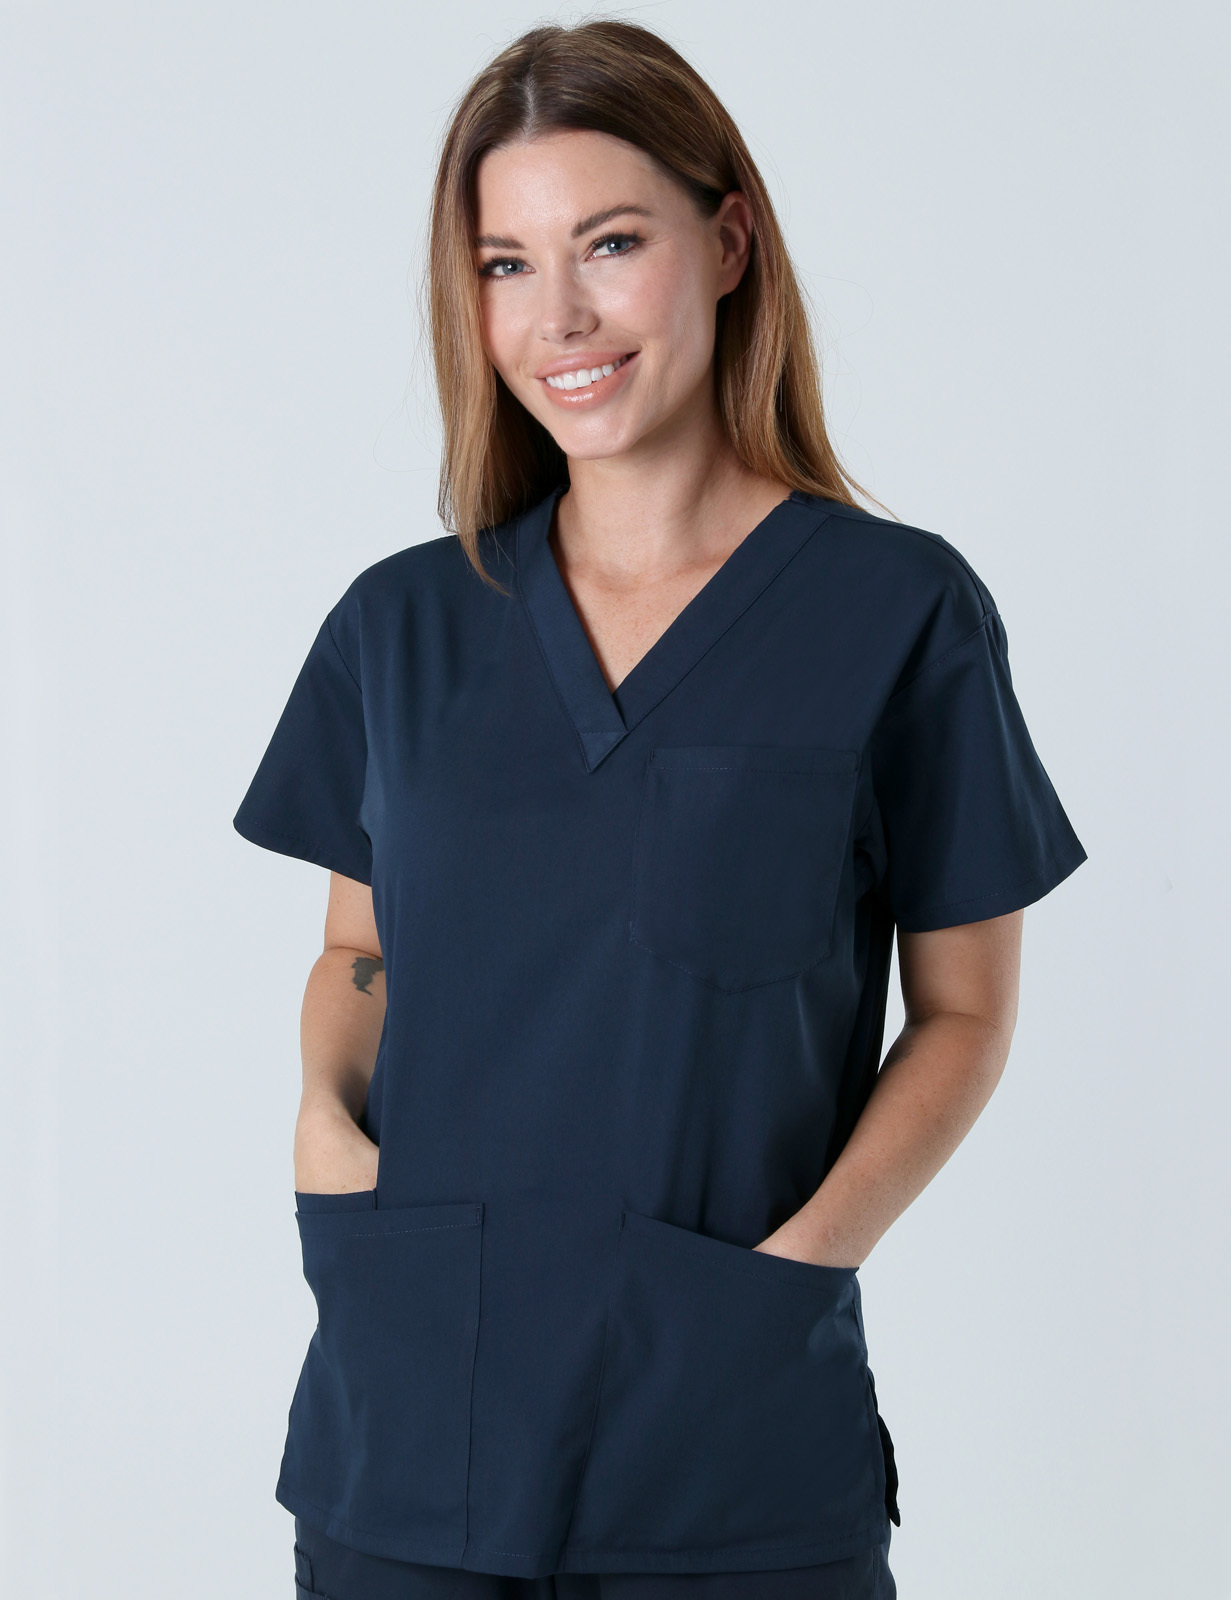 Bundaberg Hospital - MI Nurse (4 Pocket Scrub Top and Cargo Pants in Navy incl Logos)